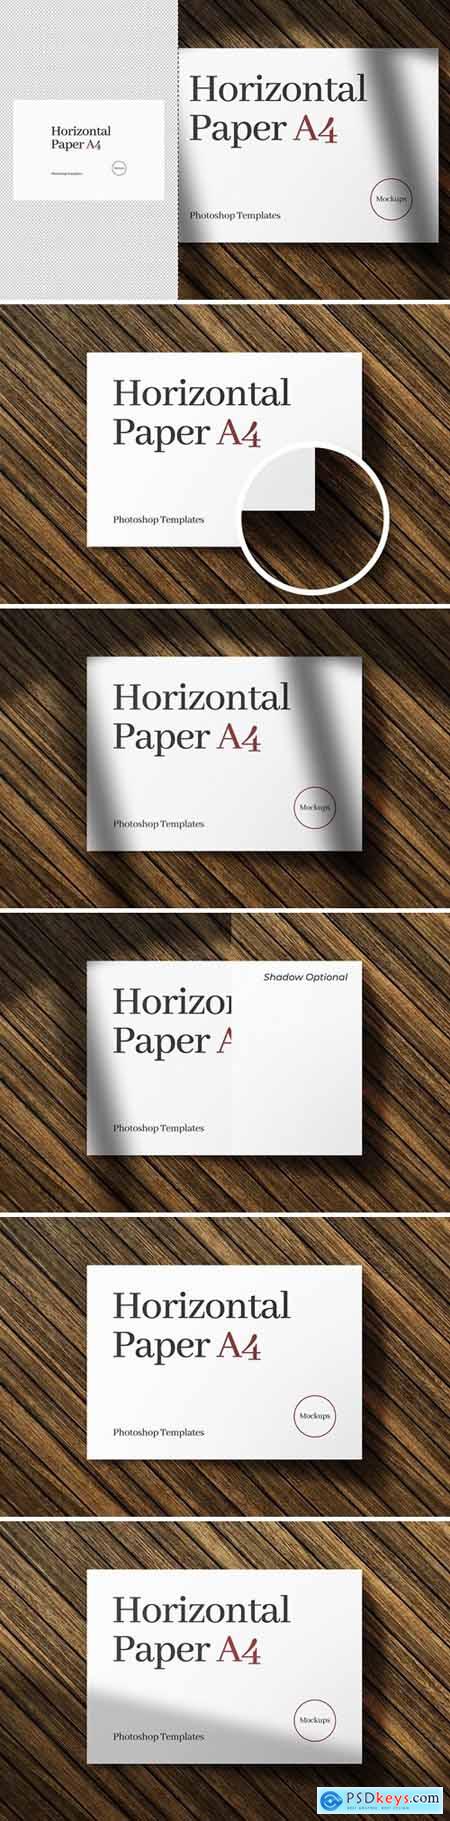 Horizontal Paper Mockup